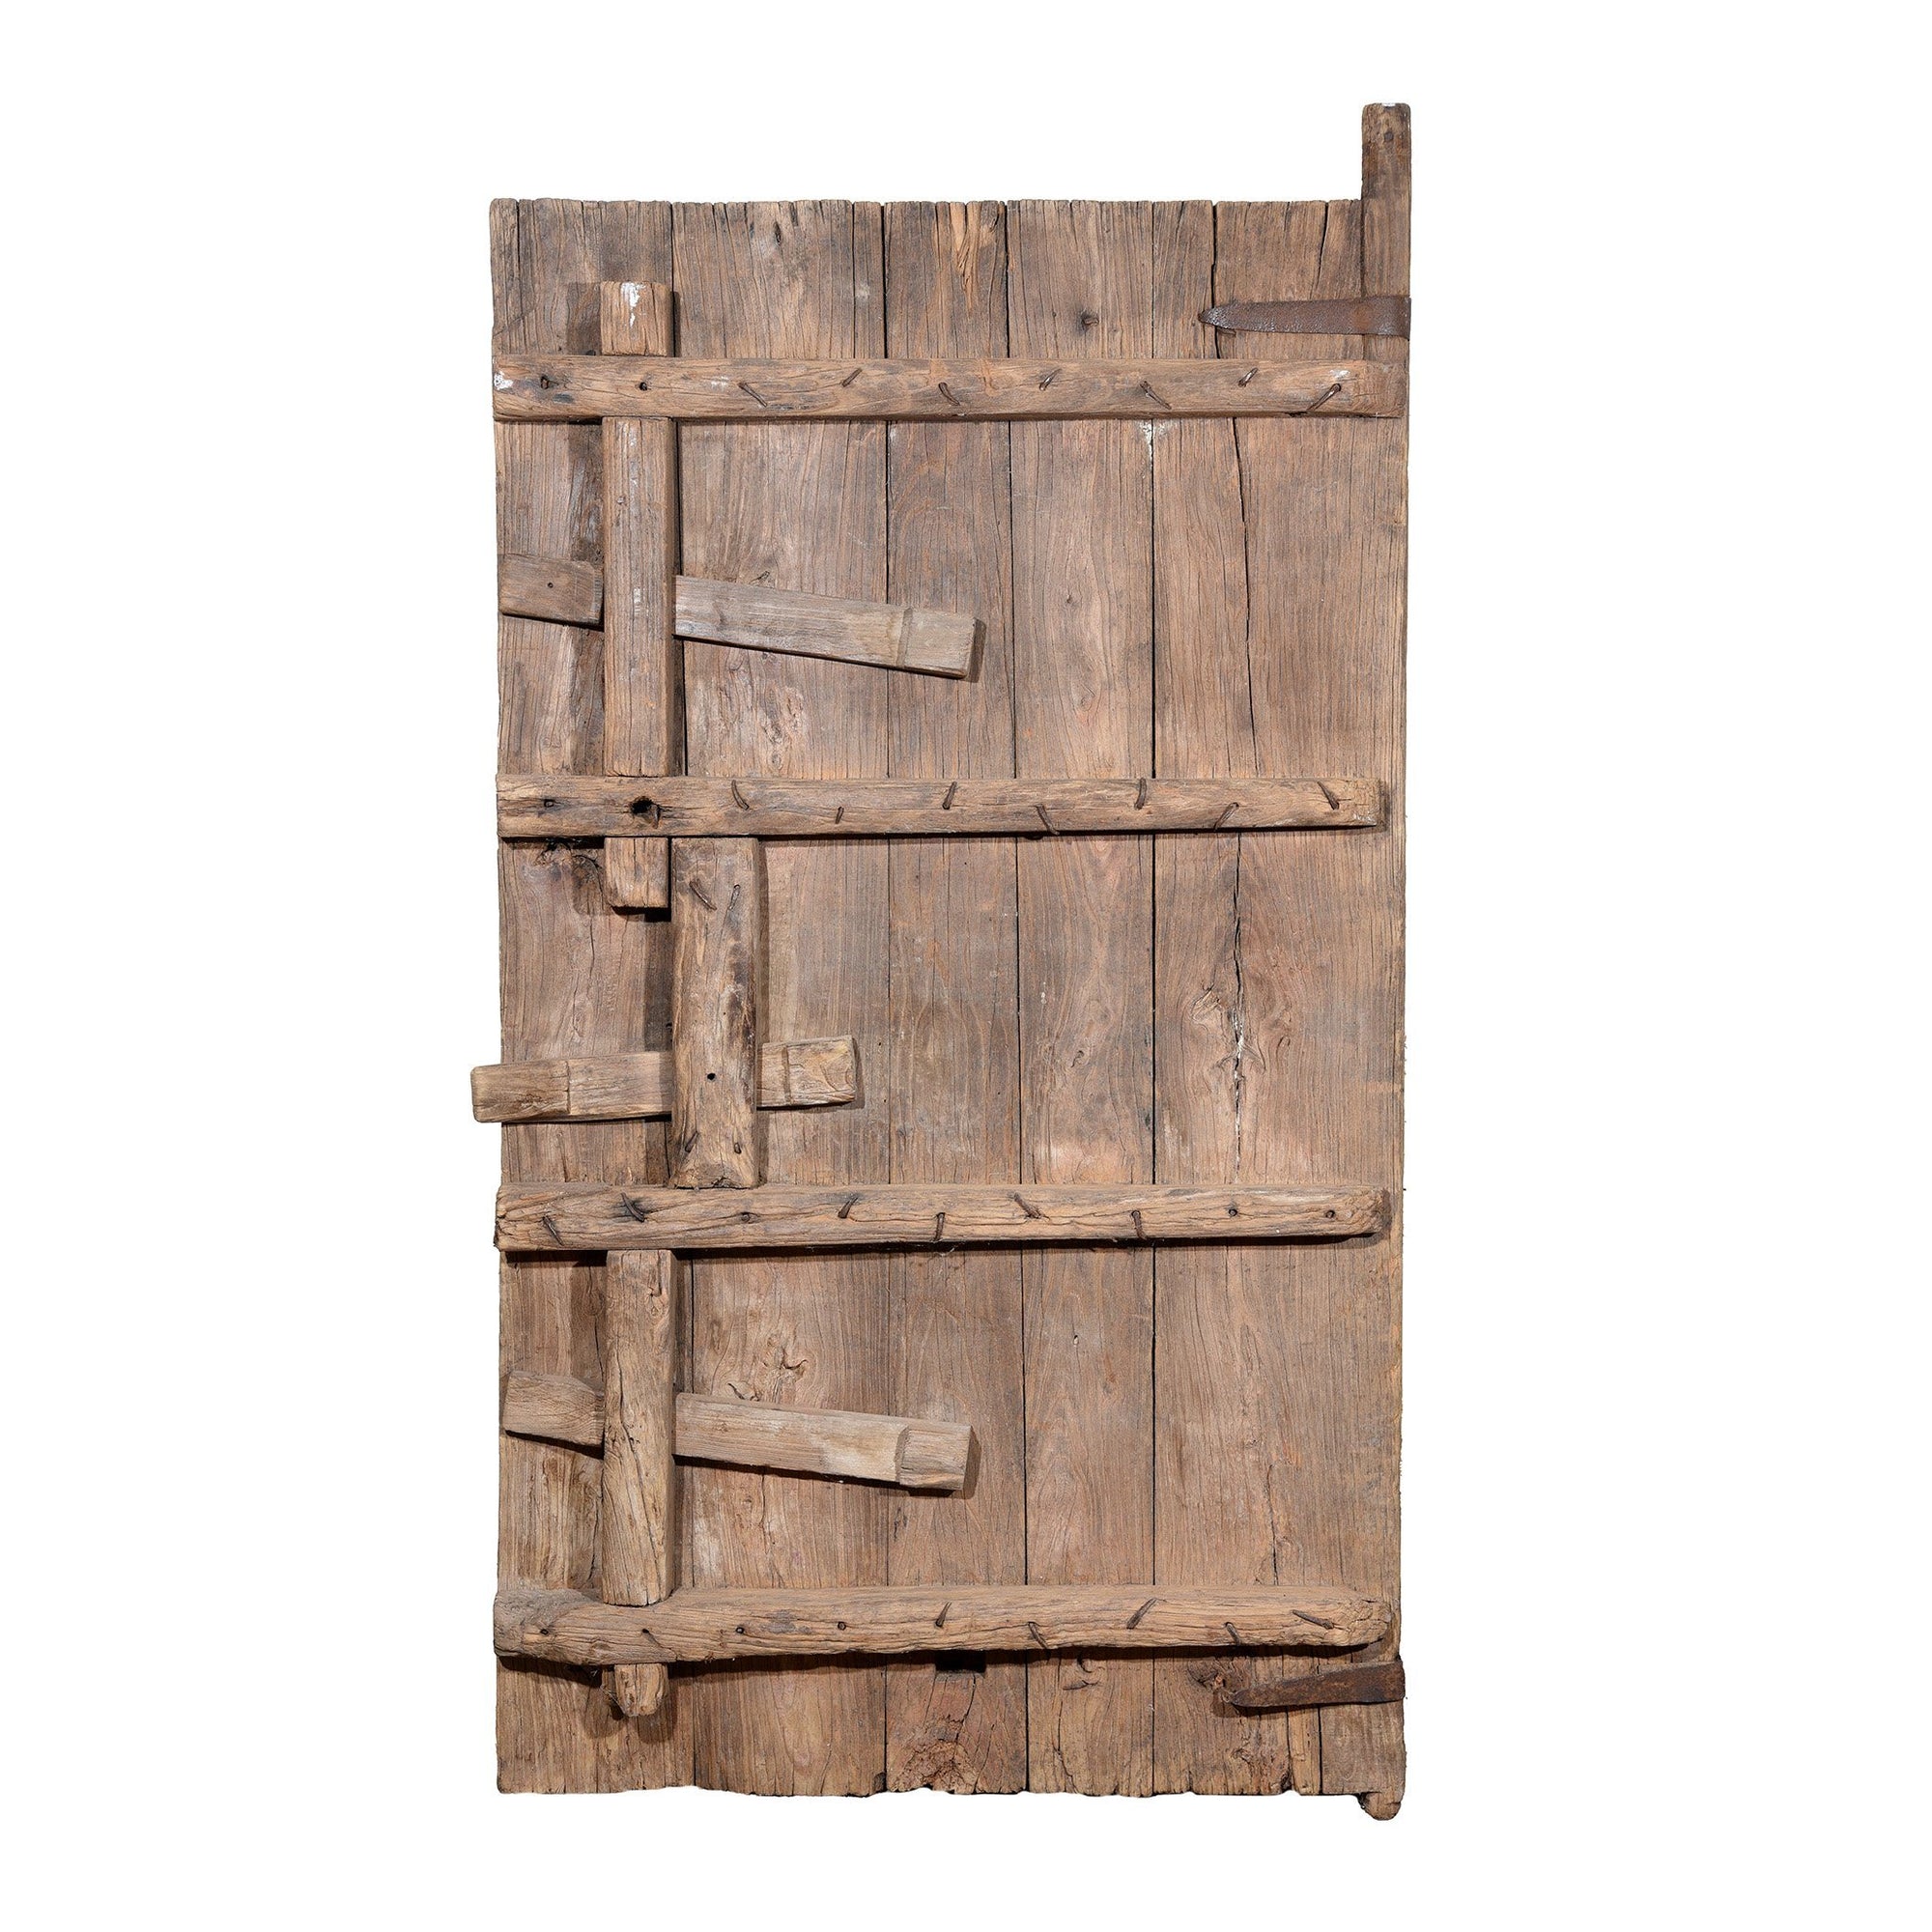 Elm Farmhouse Door From Shanxi - Ca 100 yrs old | Indigo Oriental Antiques